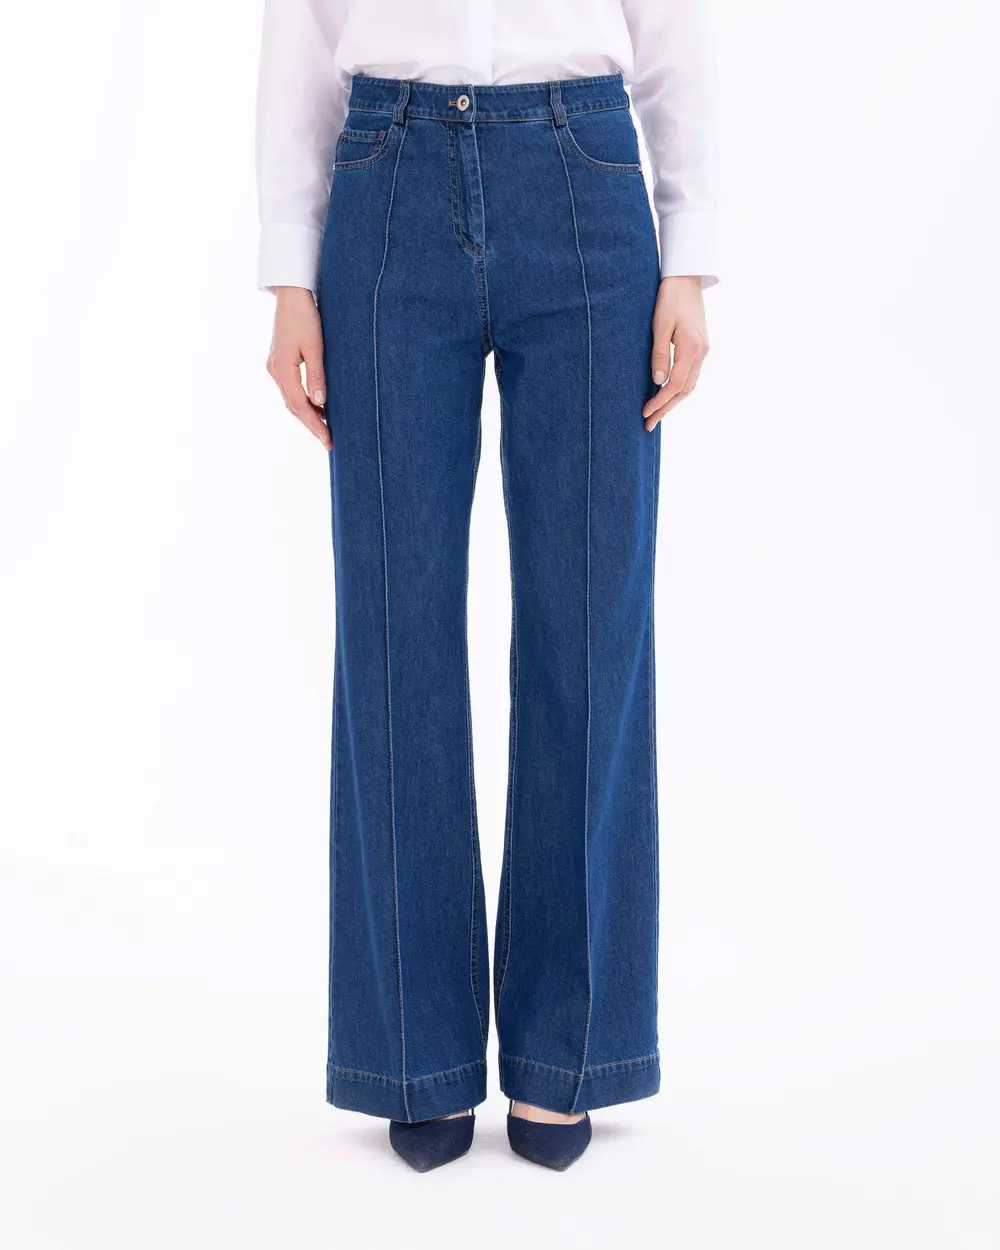 High Waist Jean Pants with Pockets